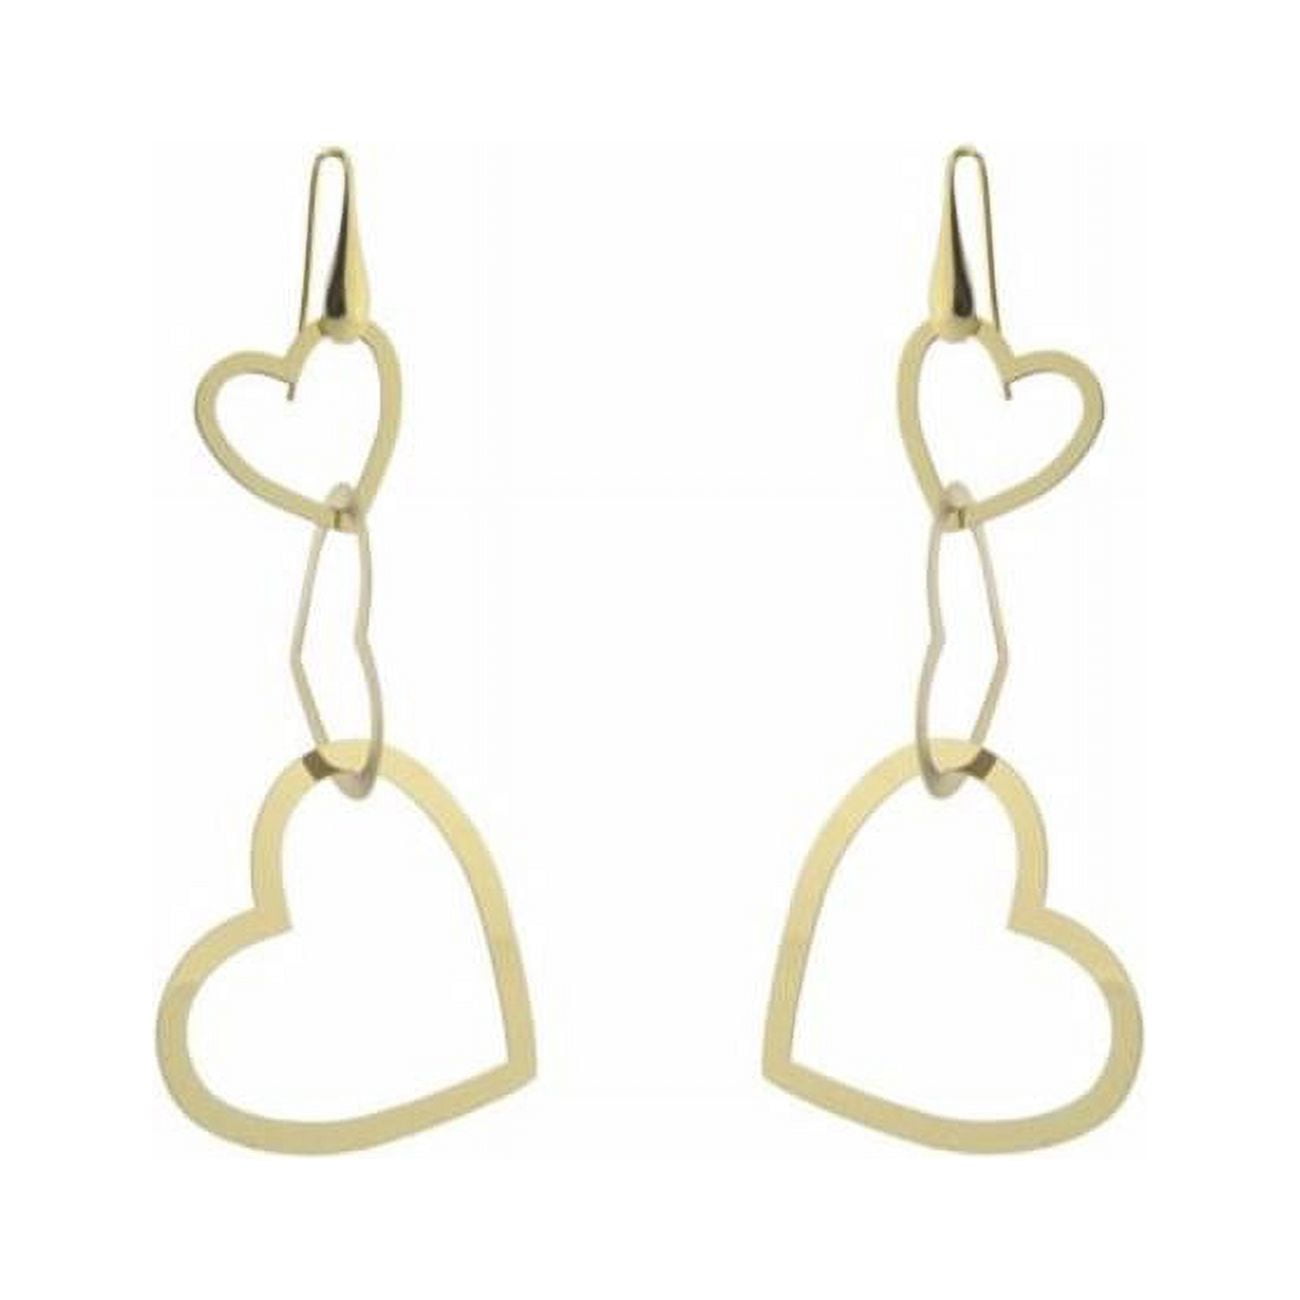 95118g 3 In. 18k Gold Plated Sterling Silver Dangling Silhouette Heart Earrings